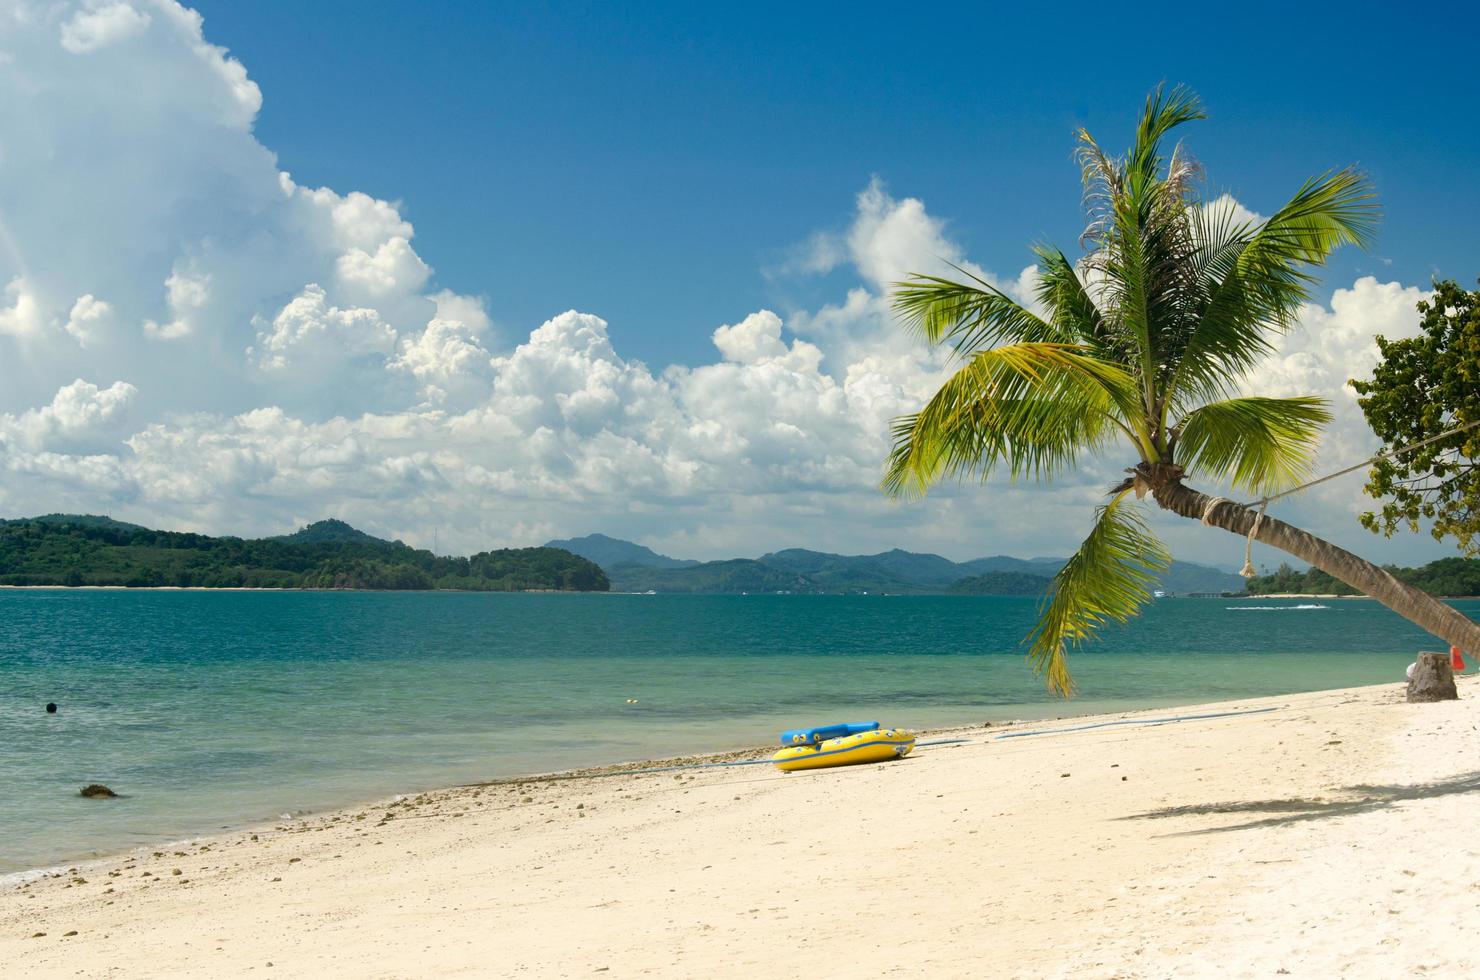 kokospalmen en strand in thailand foto